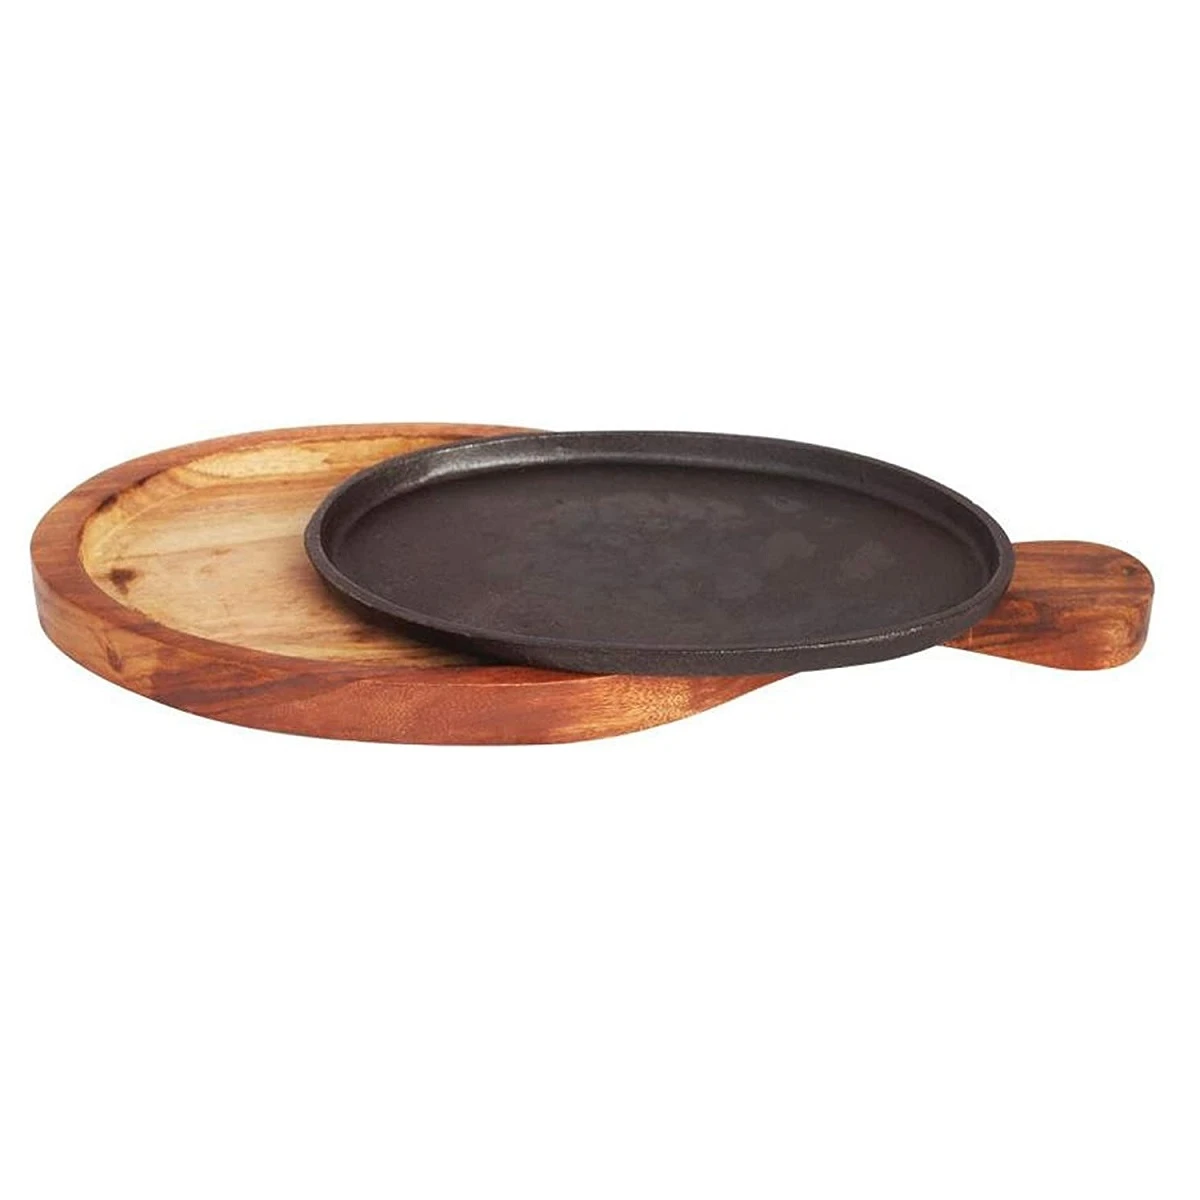 Modern Serving Platter Wooden Bat Base Serving Platter Oval Shape Sizzler Plate with Iron Base Natural Wooden Finish